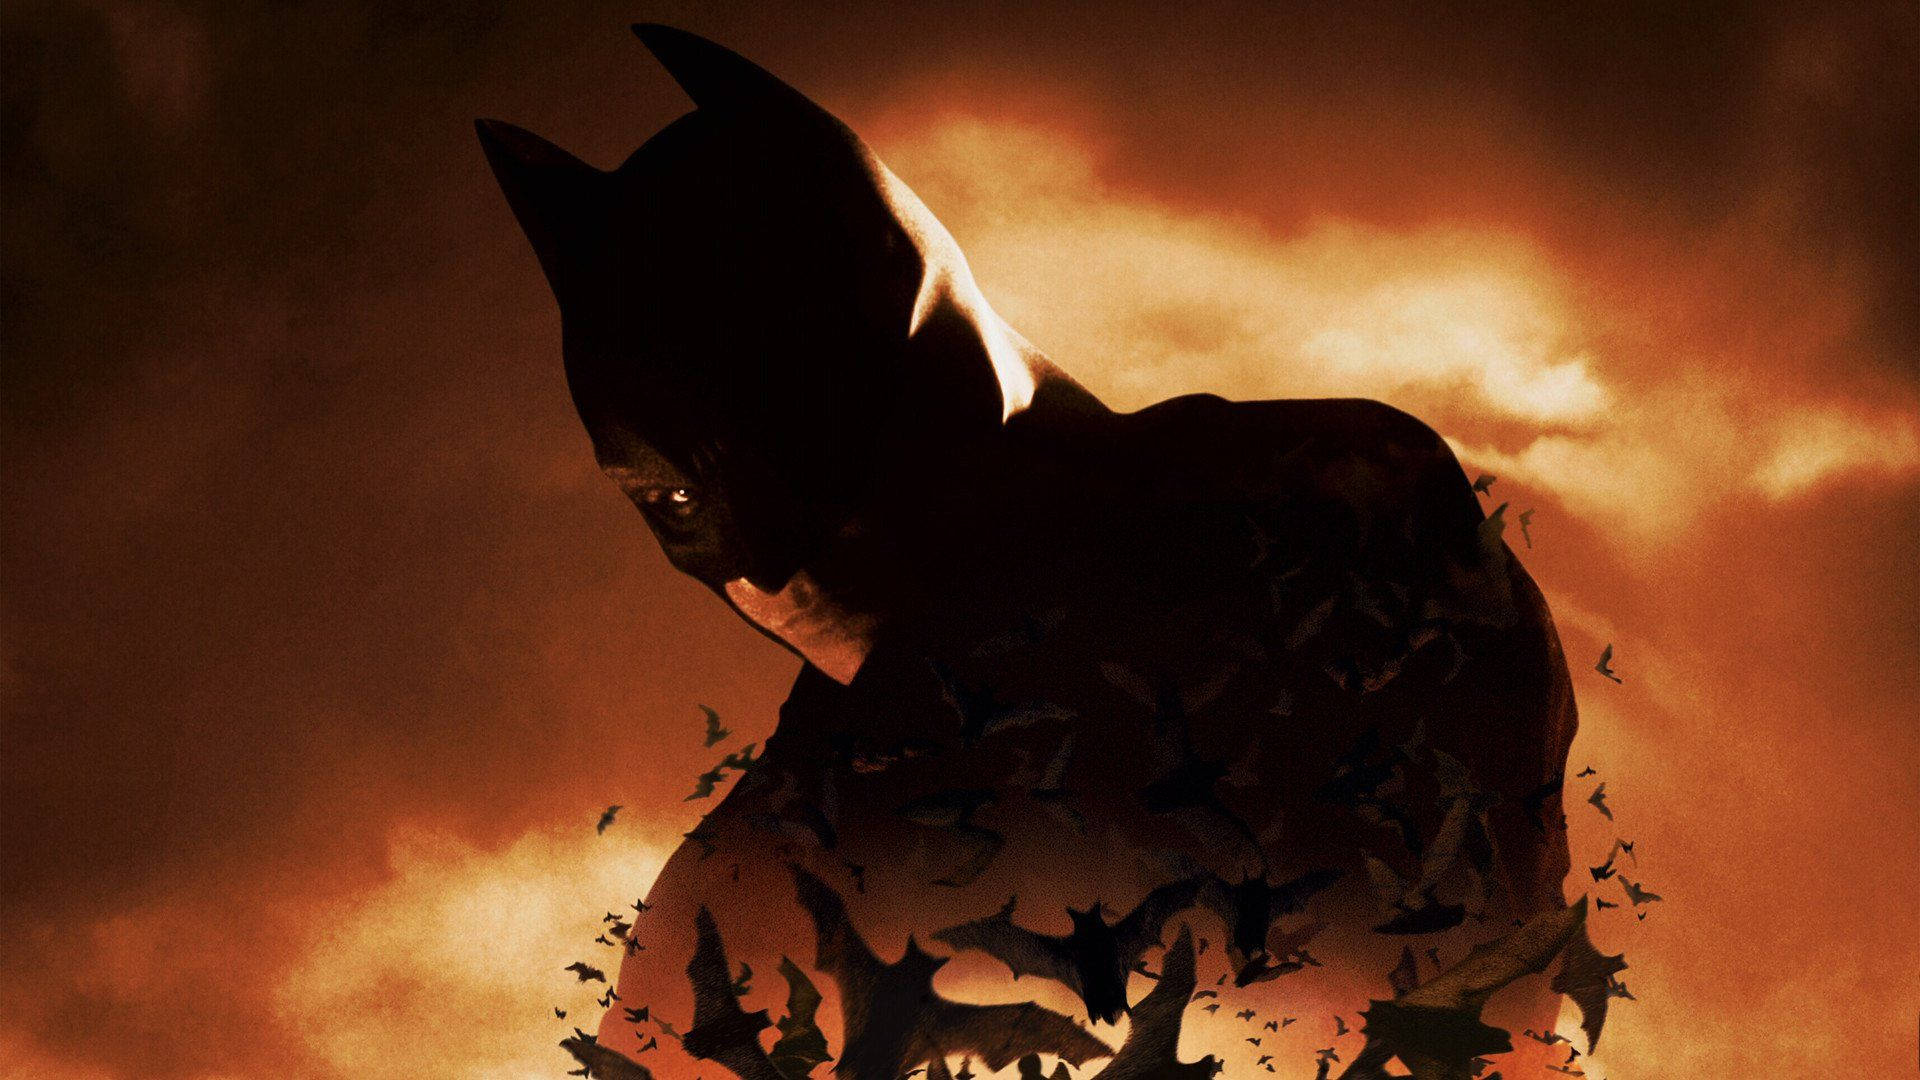 Batman Creative Movie Poster Wallpaper